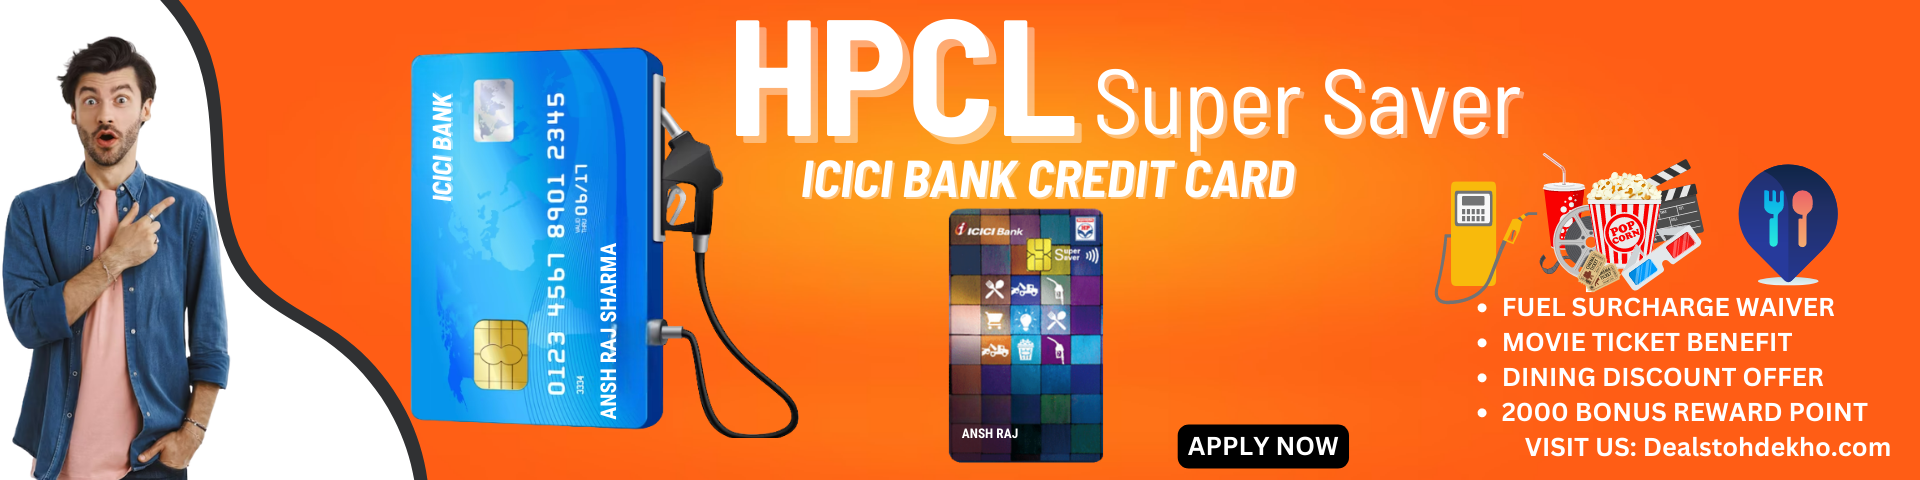 ICICI Bank HPCL Super Saver Card